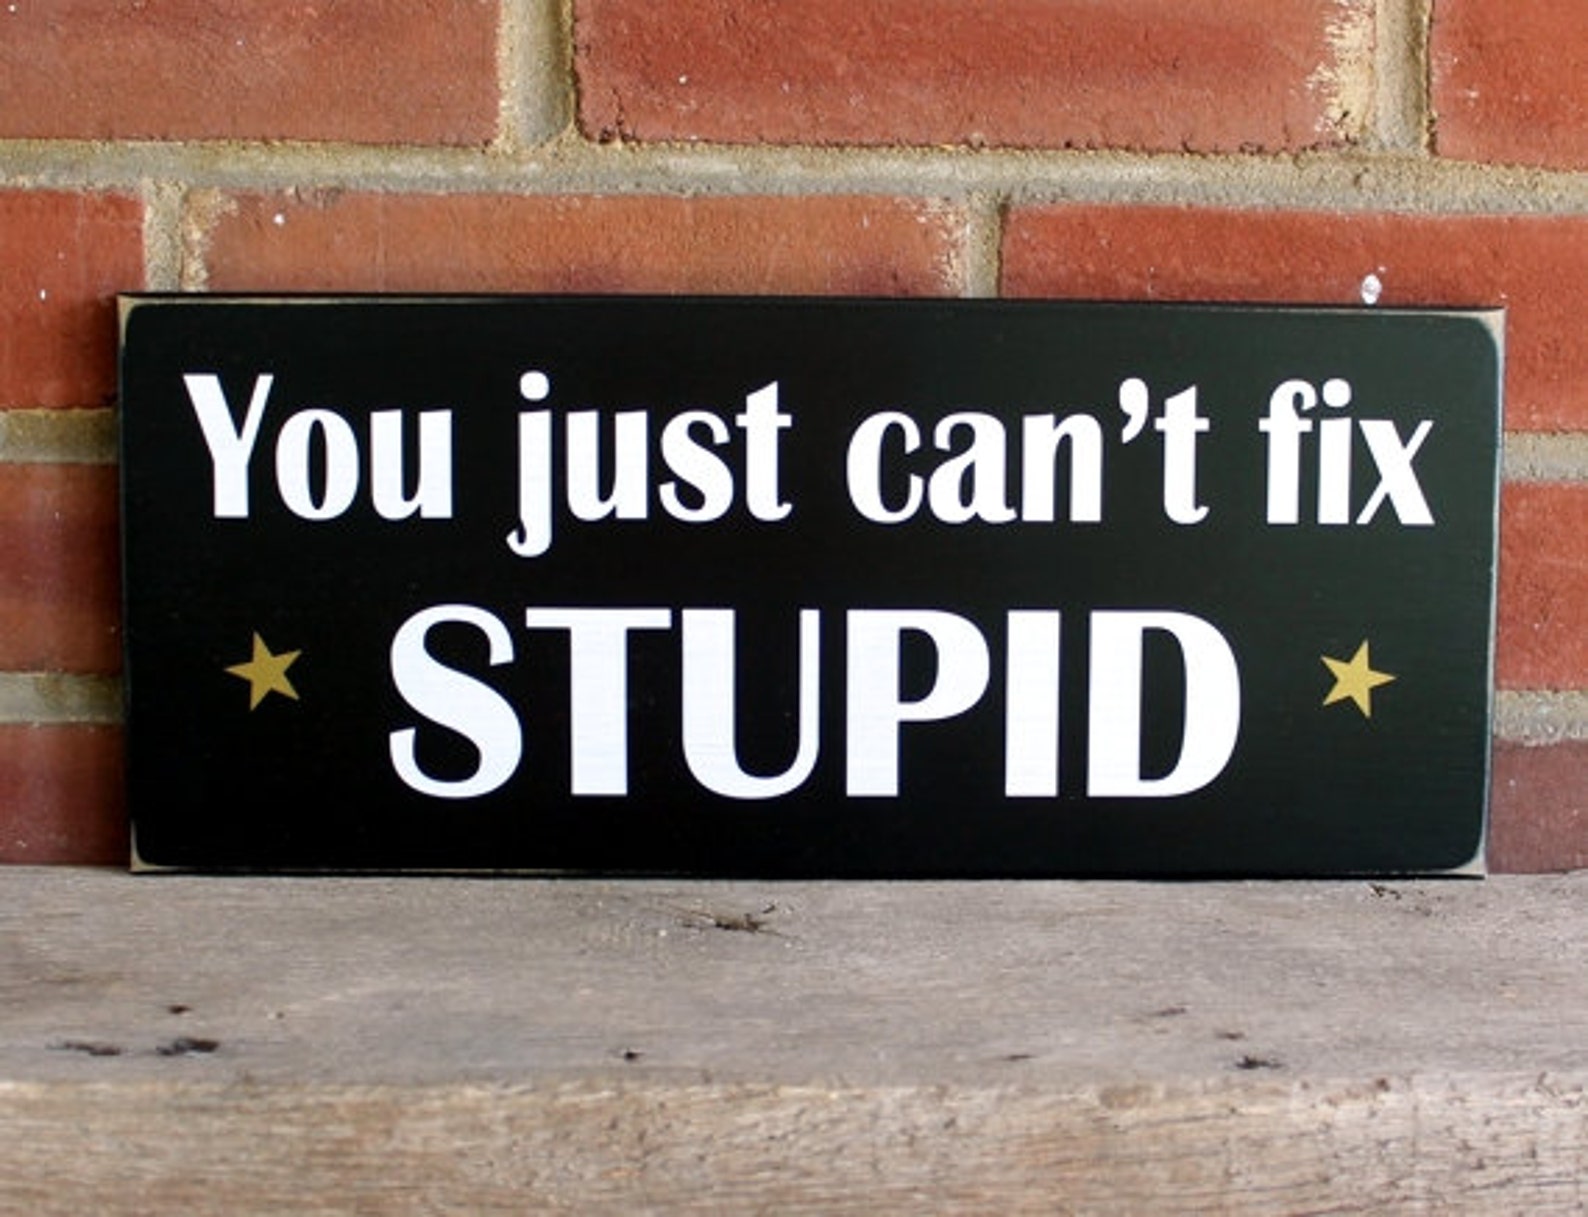 Can you fix my. You can't Fix stupid. Stupid signs. Im Fix her сой. Don't be stupid картинки с названием.